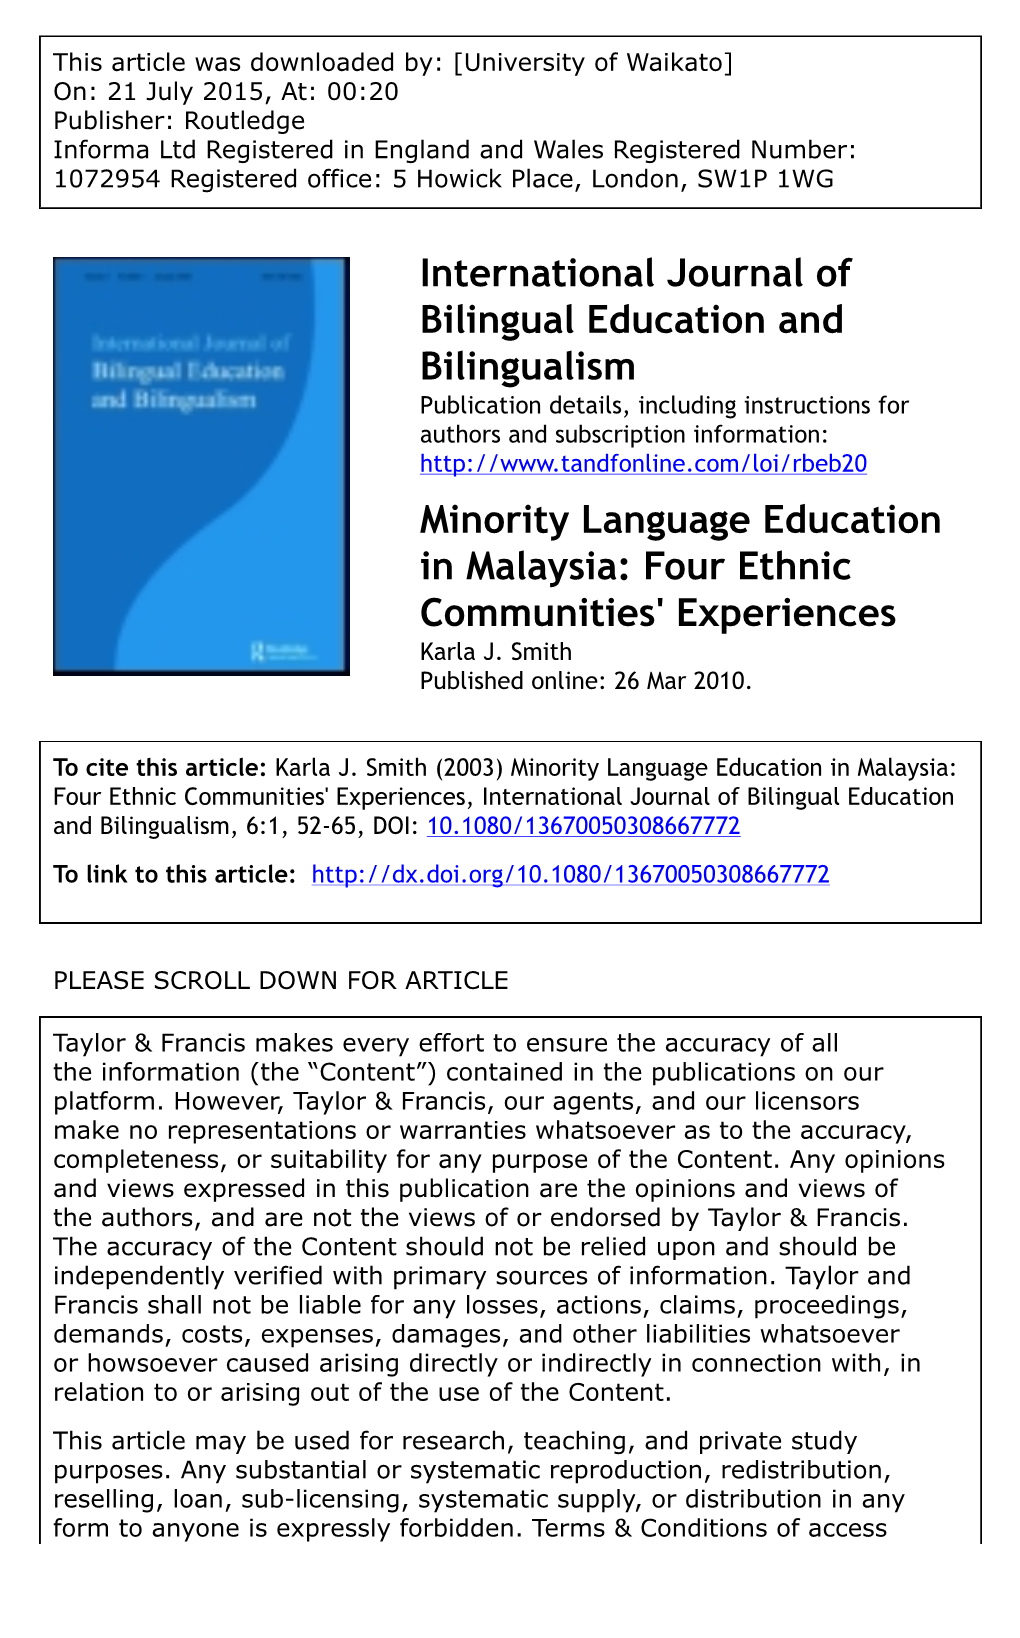 Minority Language Education in Malaysia: Four Ethnic Communities' Experiences Karla J